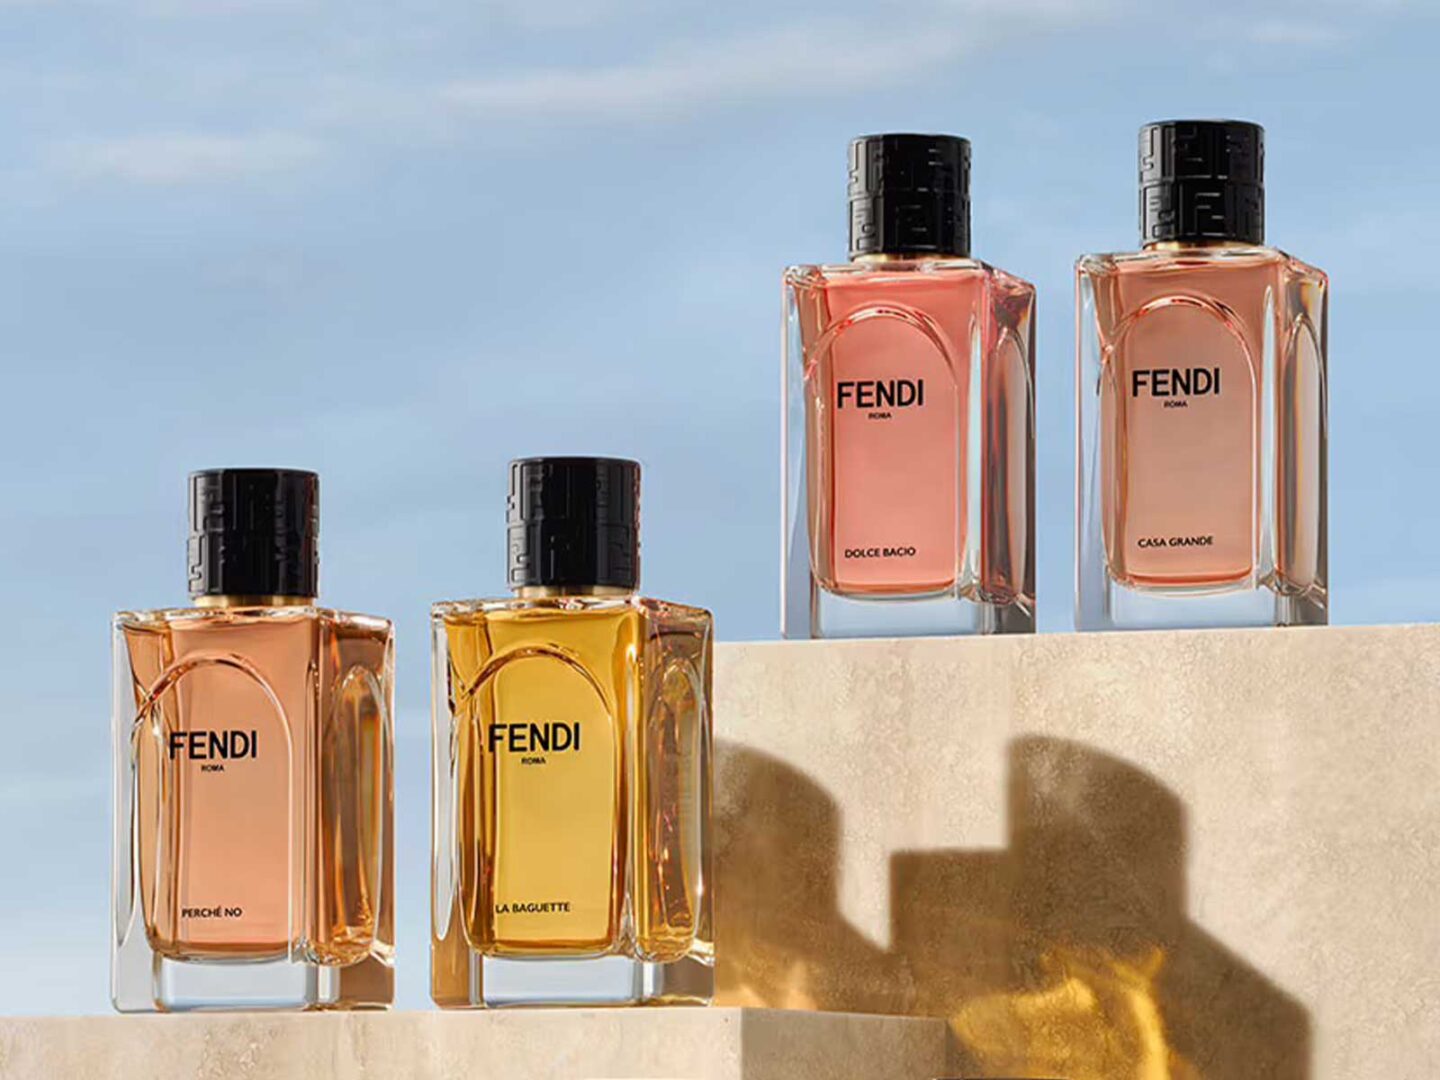 Fendi’s family history in seven fragrances